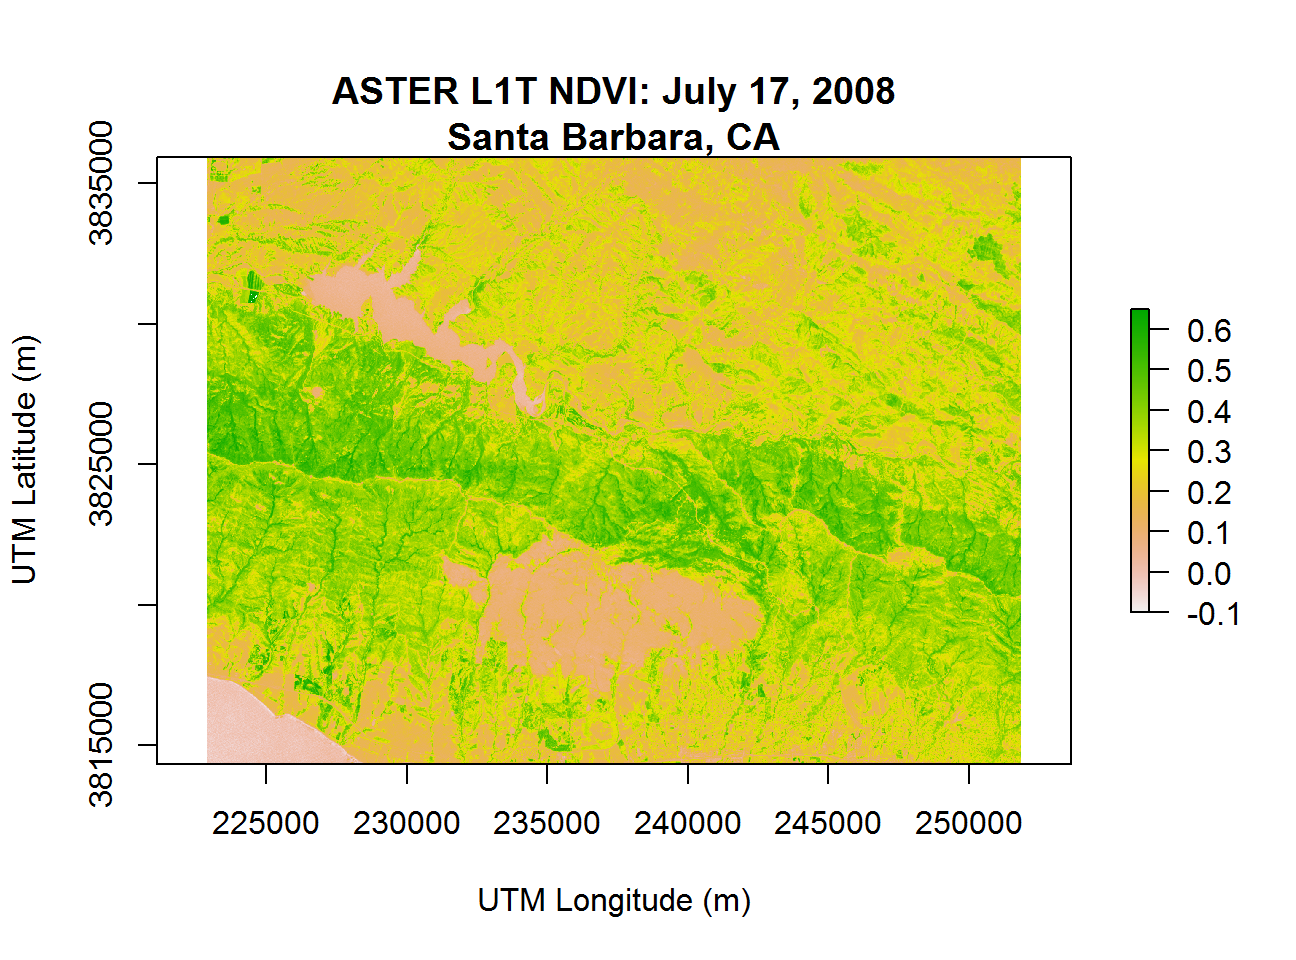 AST_L1T NDVI data over Santa Barbara.